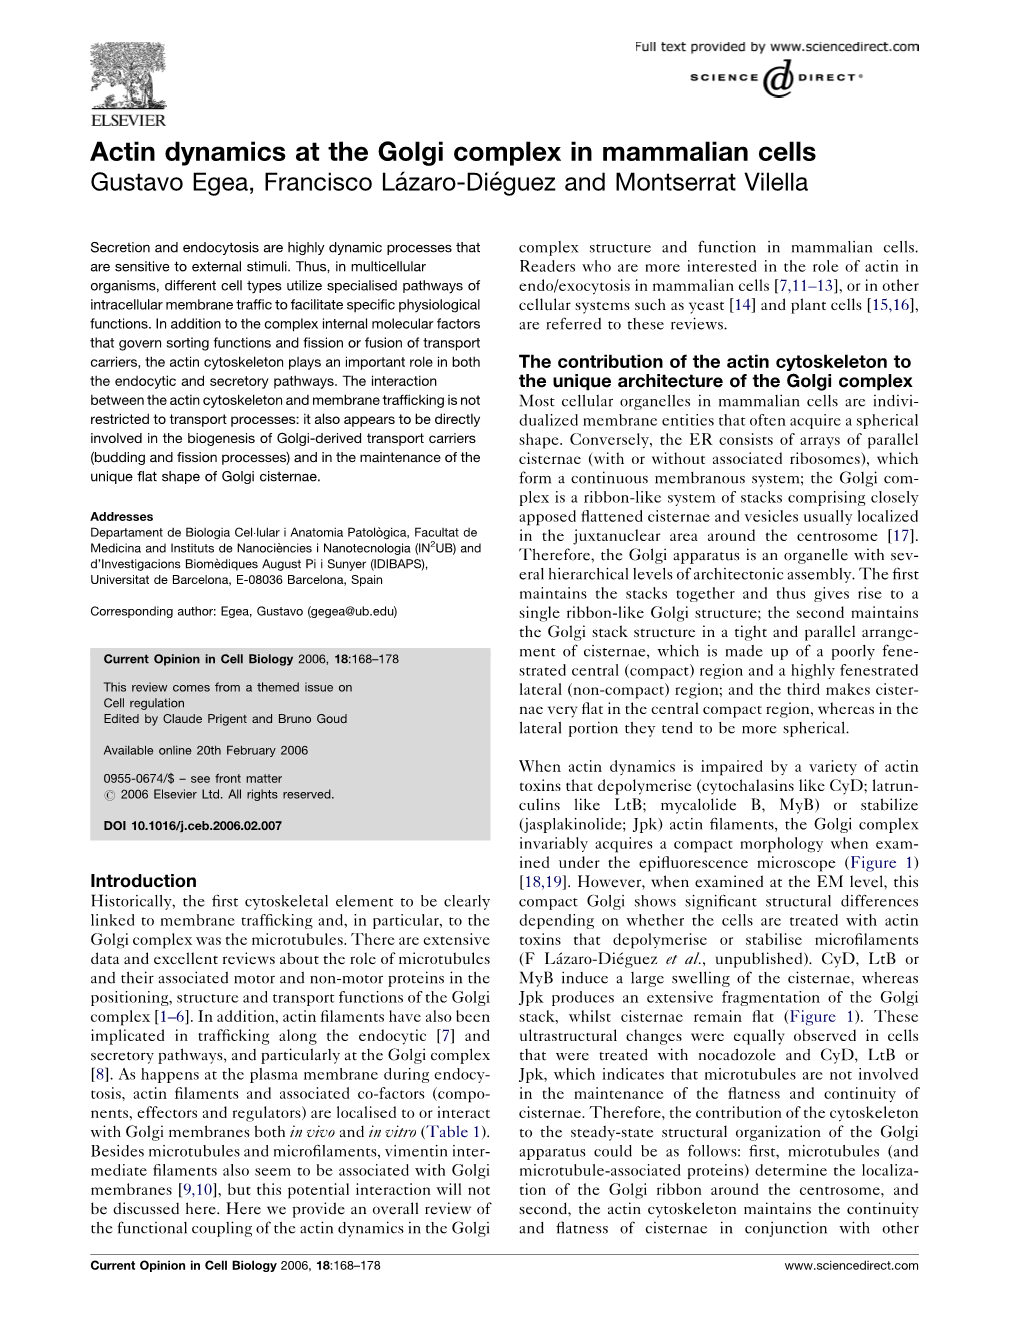 Actin Dynamics at the Golgi Complex in Mammalian Cells Gustavo Egea, Francisco La´ Zaro-Die´ Guez and Montserrat Vilella